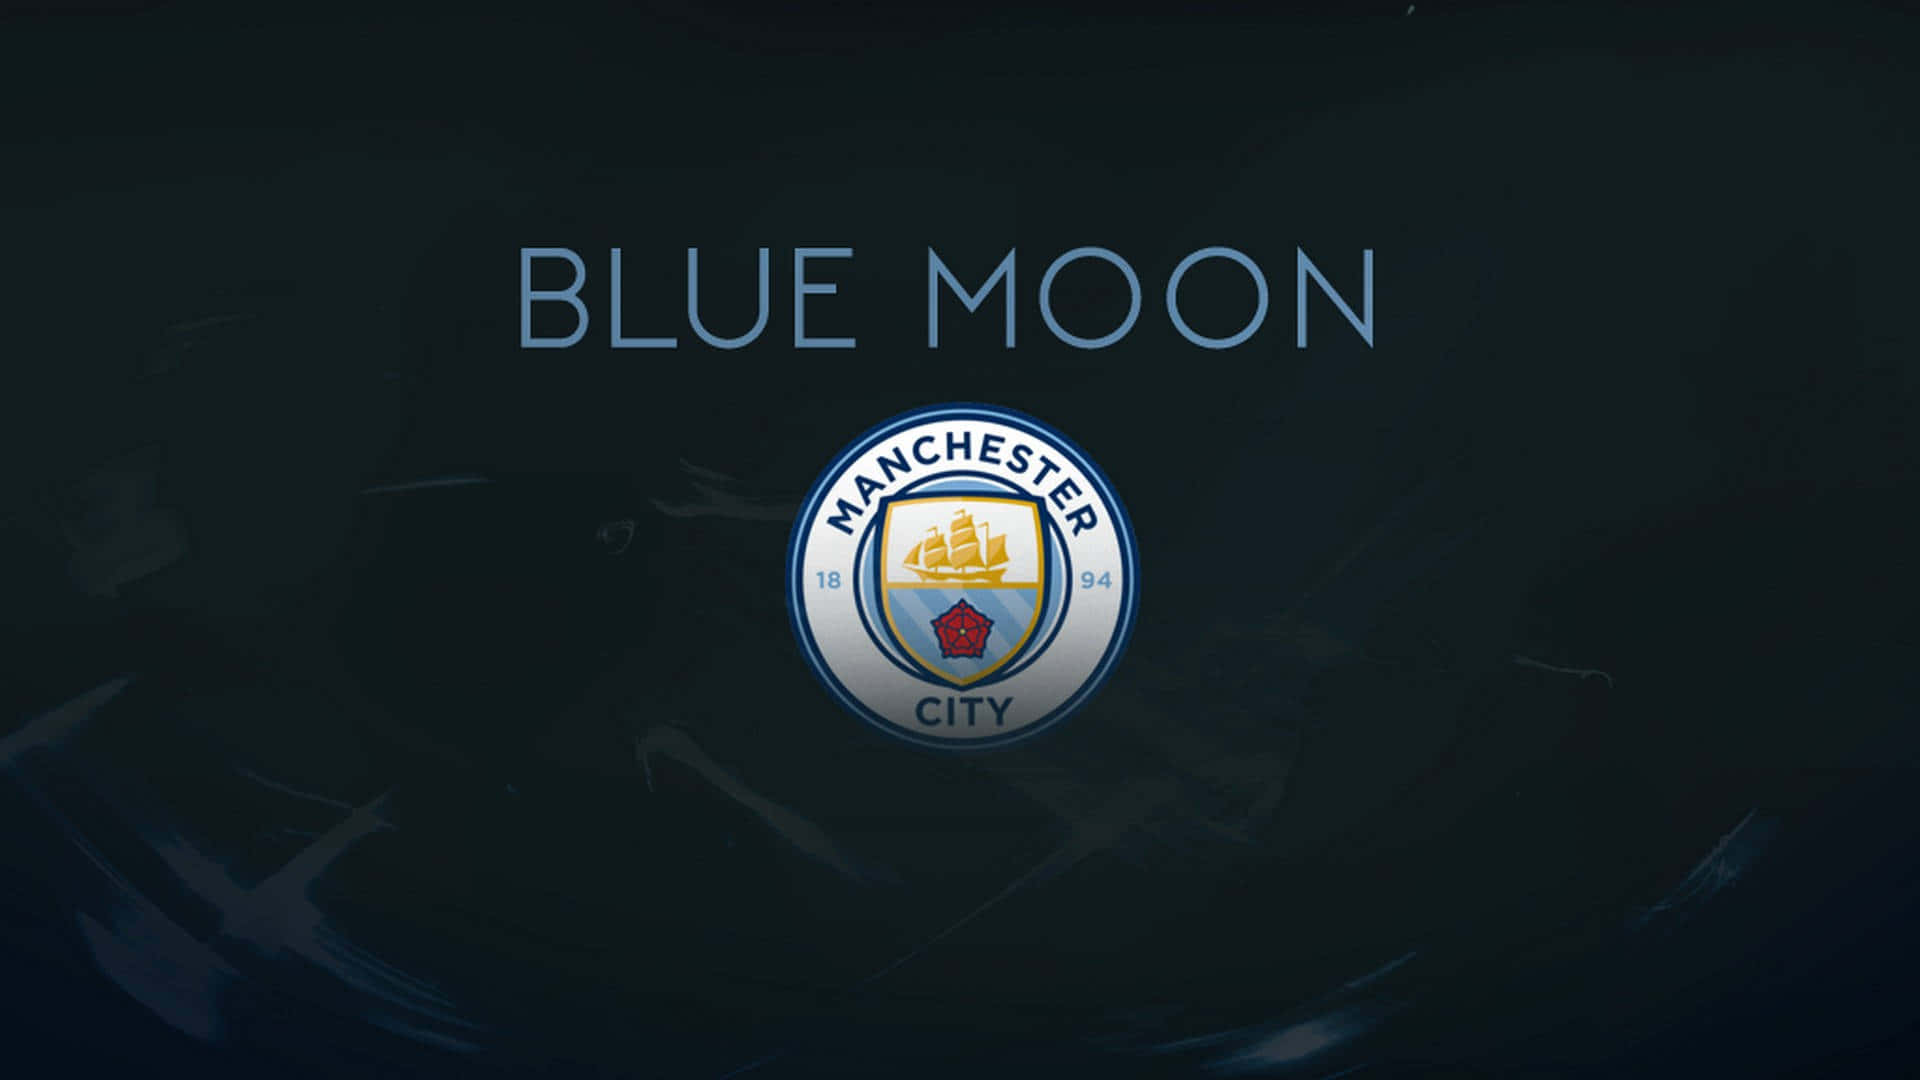 Manchester City Blue Moon Iphone Wallpaper